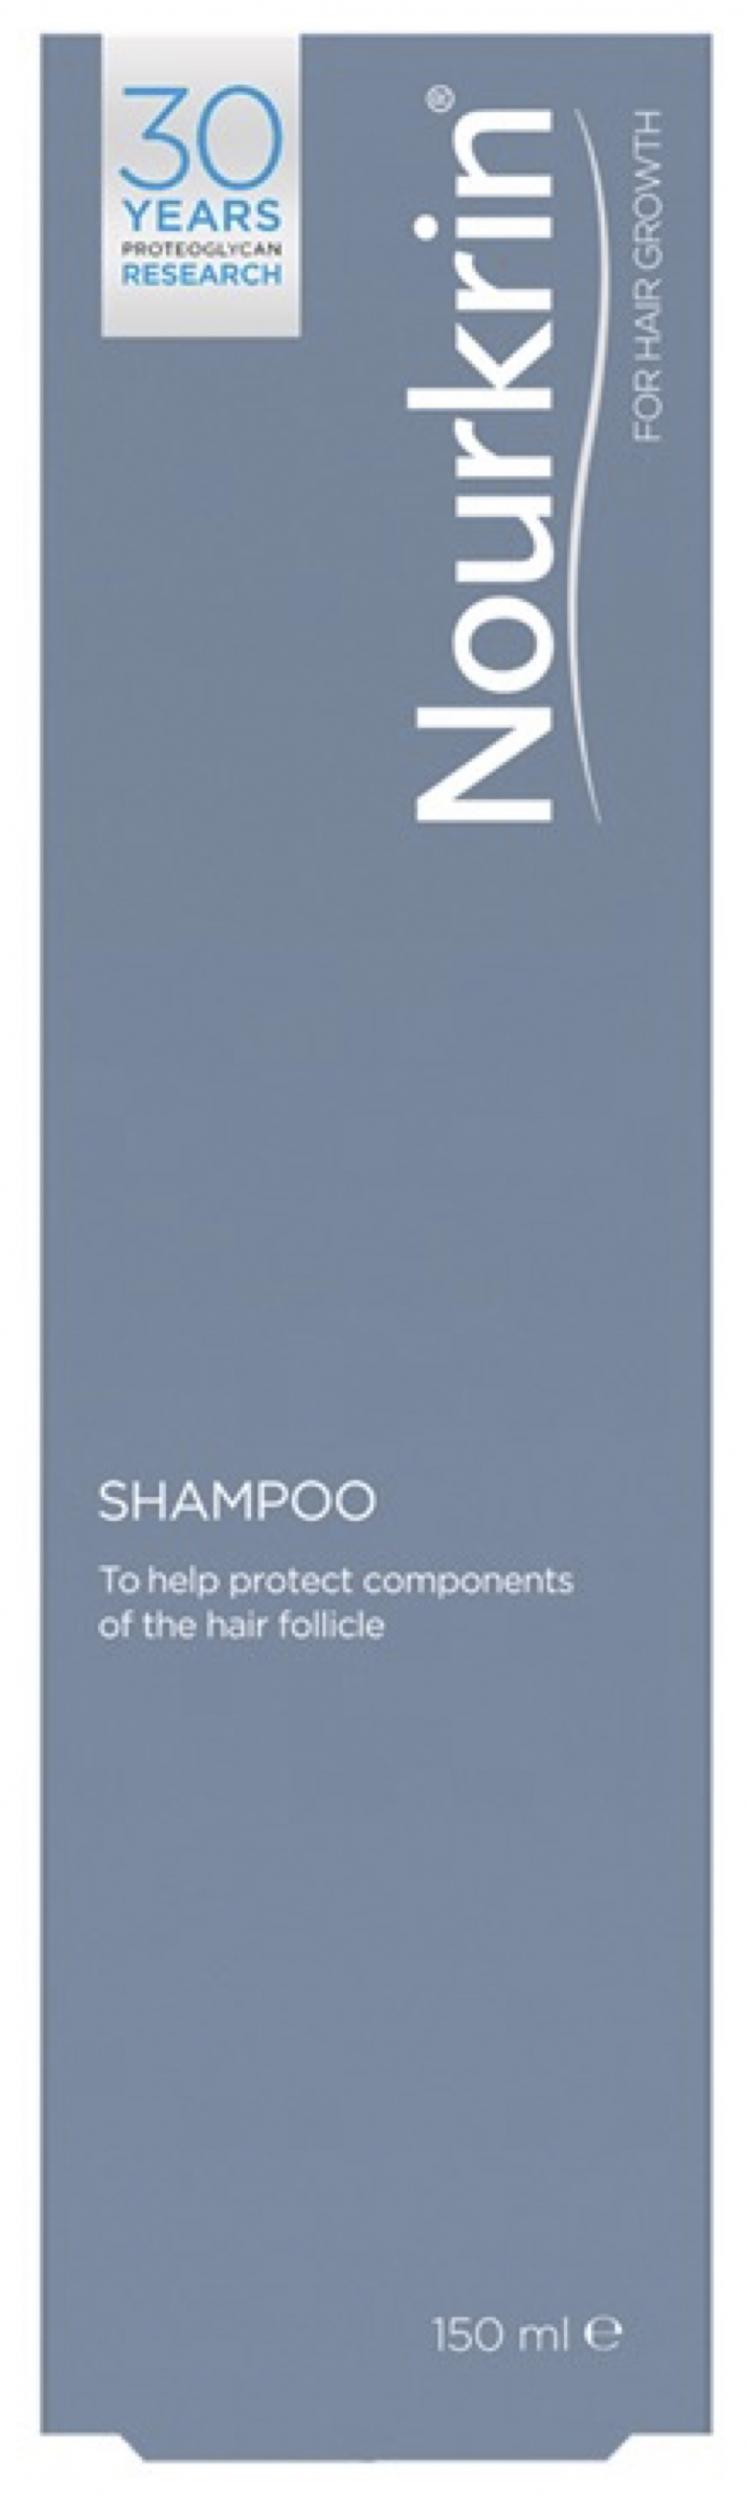 Shampoo 150ml